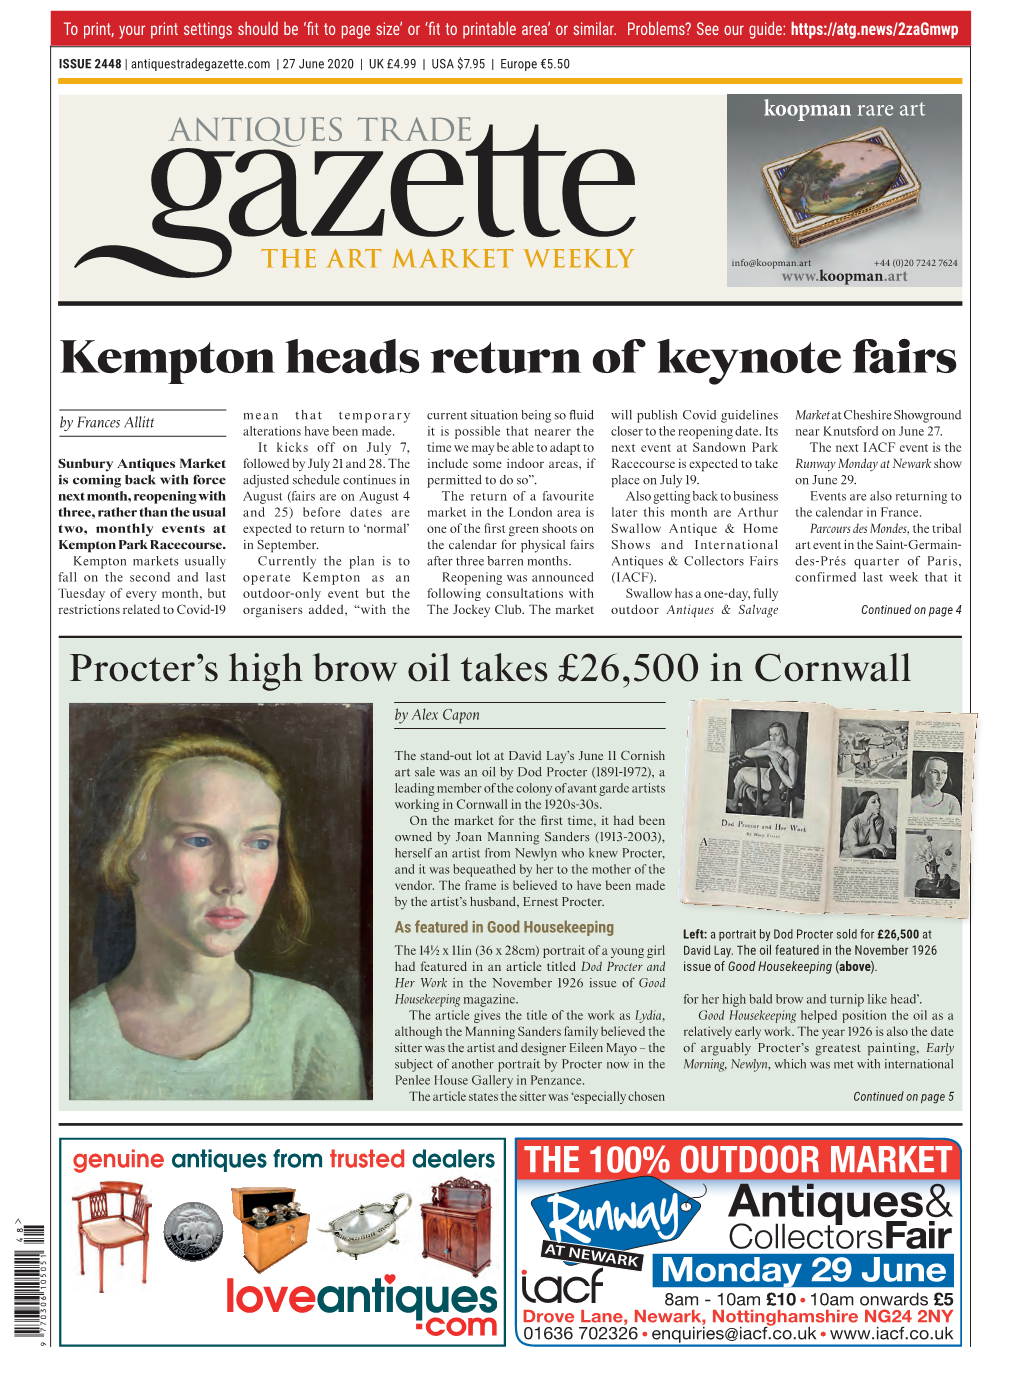 Kempton Heads Return of Keynote Fairs